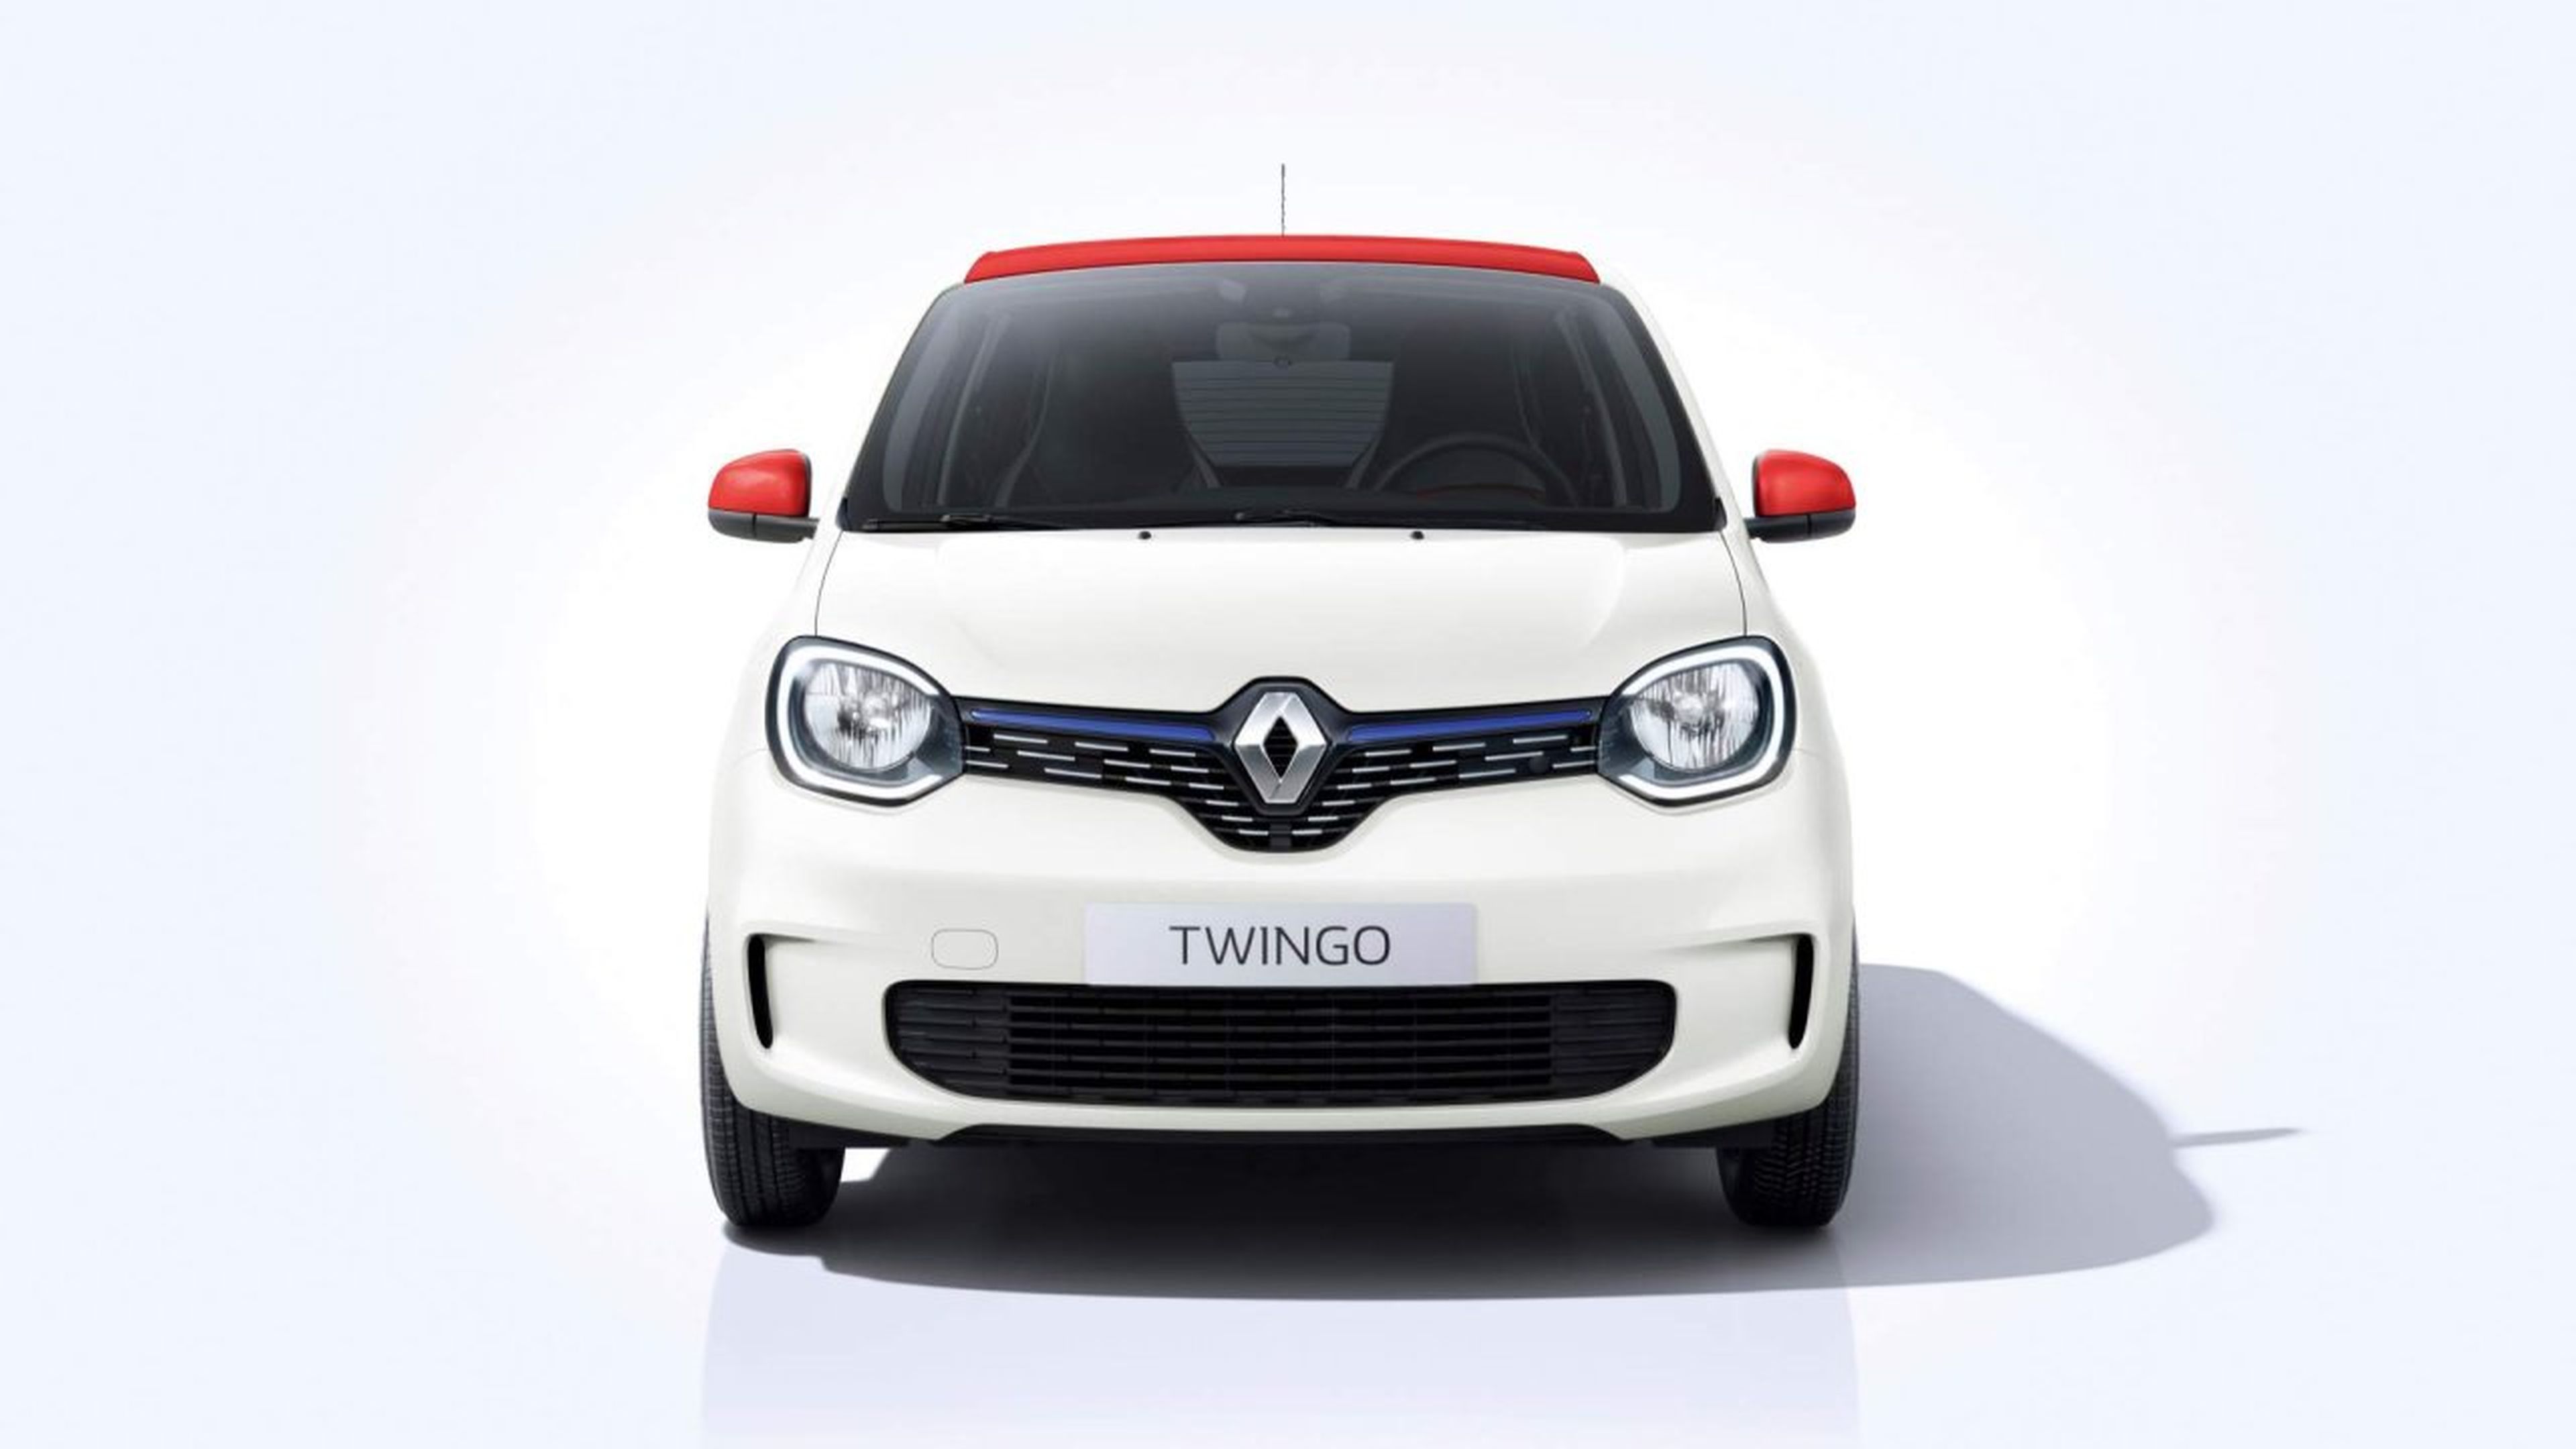 Renault Twingo Le Coq Sportif Edition